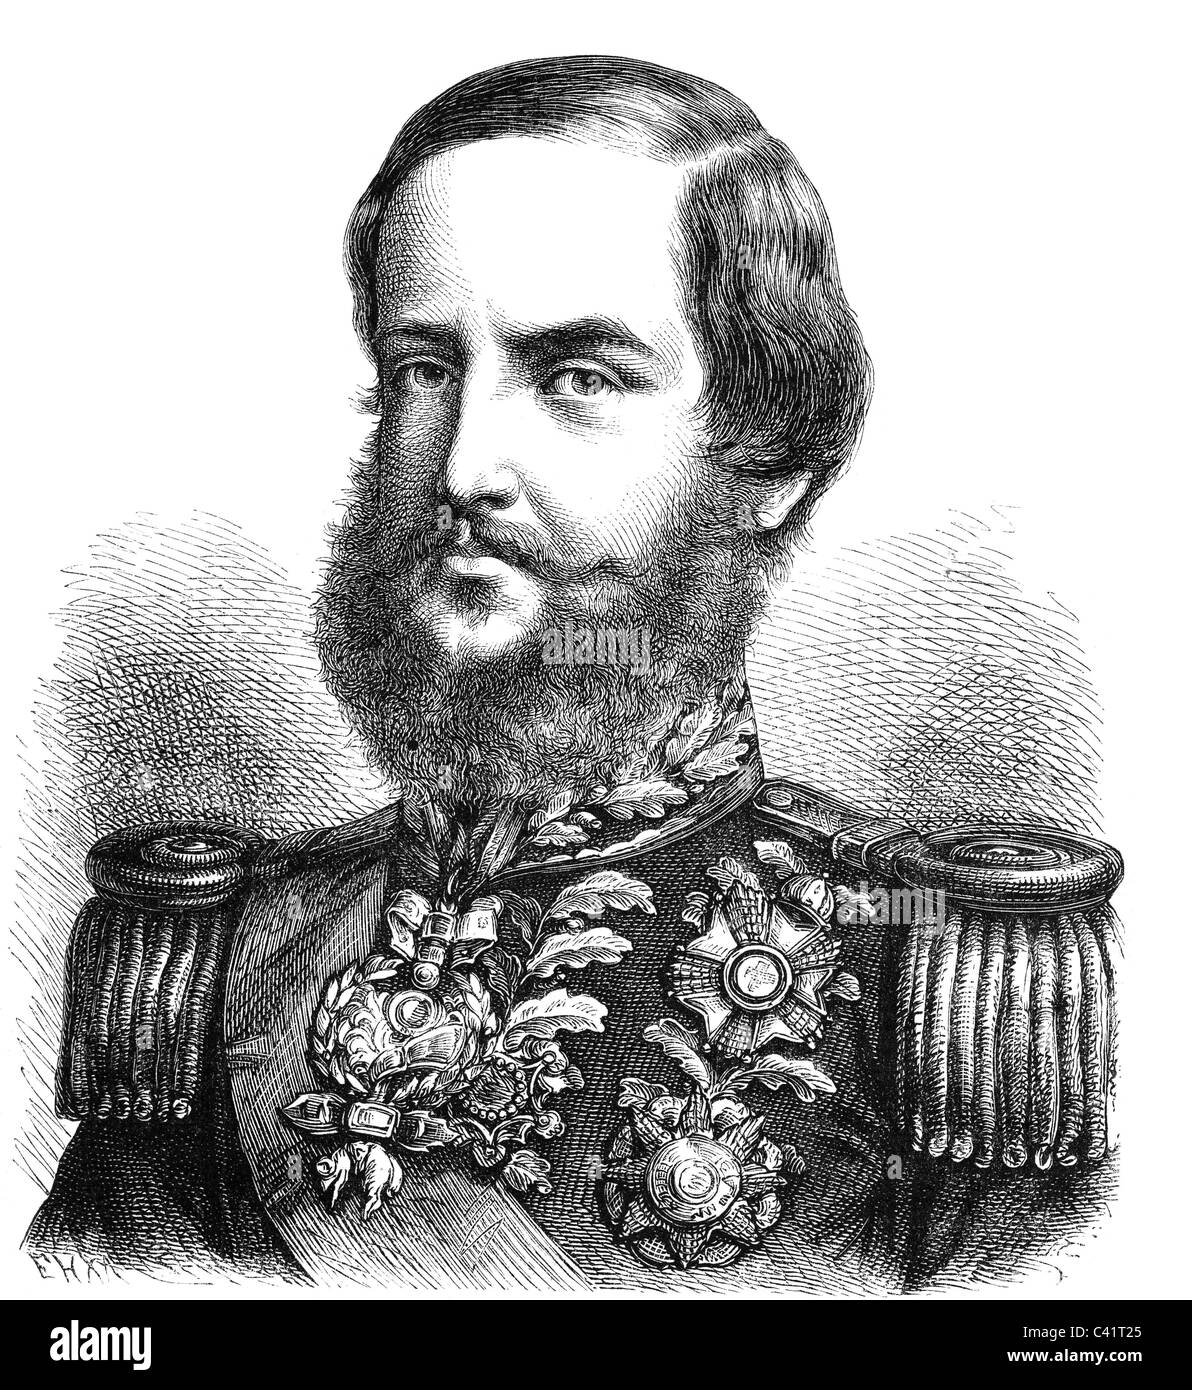 Pedro II, 2.12.1825 - 5.12.1891, Emperor of Brazil 7.4.1831 - 15.11.1889, portrait, wood engraving, 19th century, Stock Photo